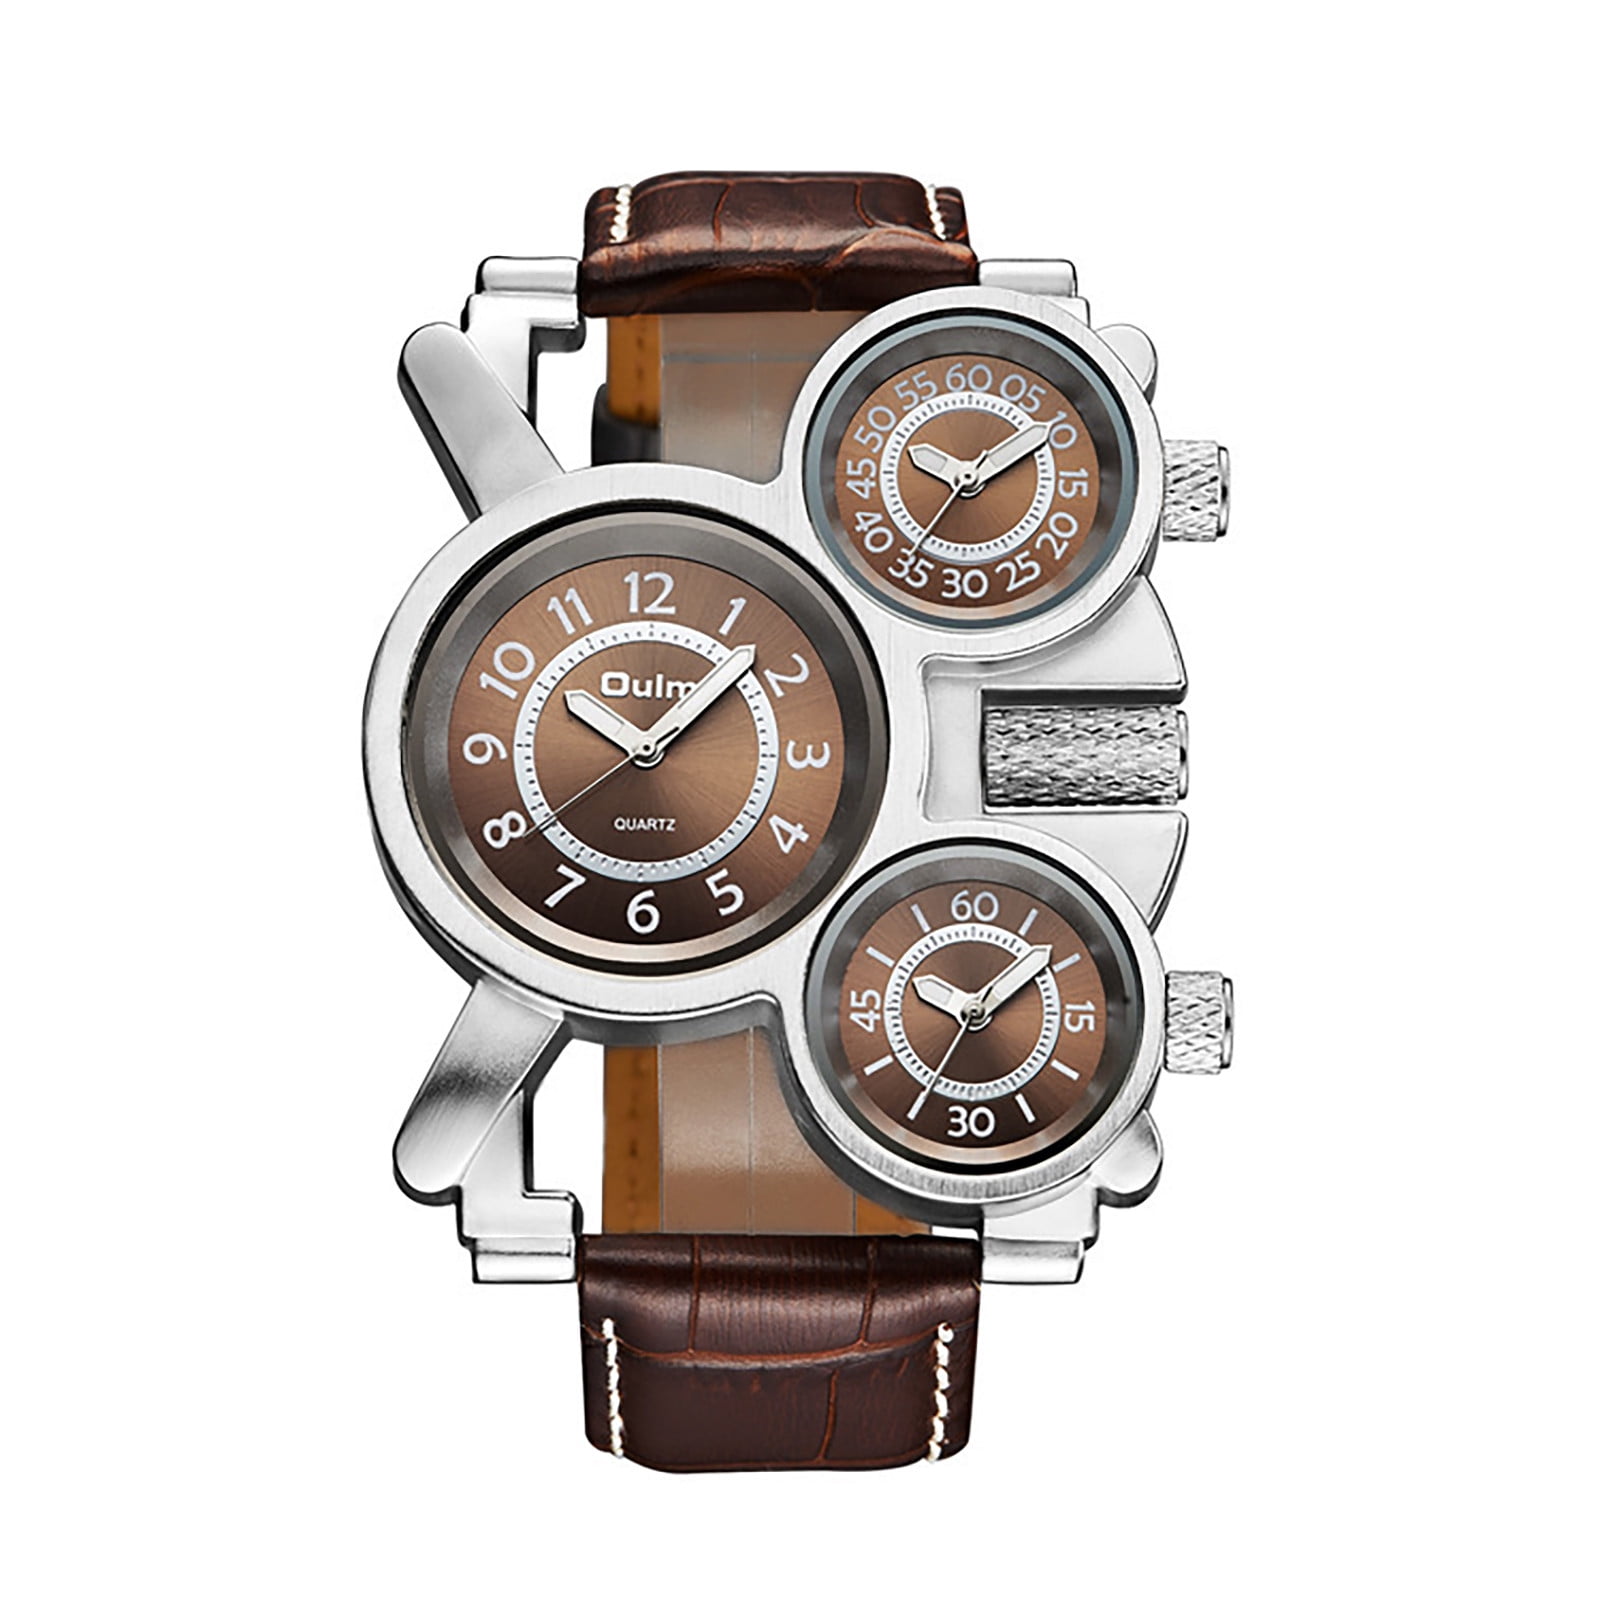 The Time Traveler: Multi-face Steampunk watch – SteampunkStyle